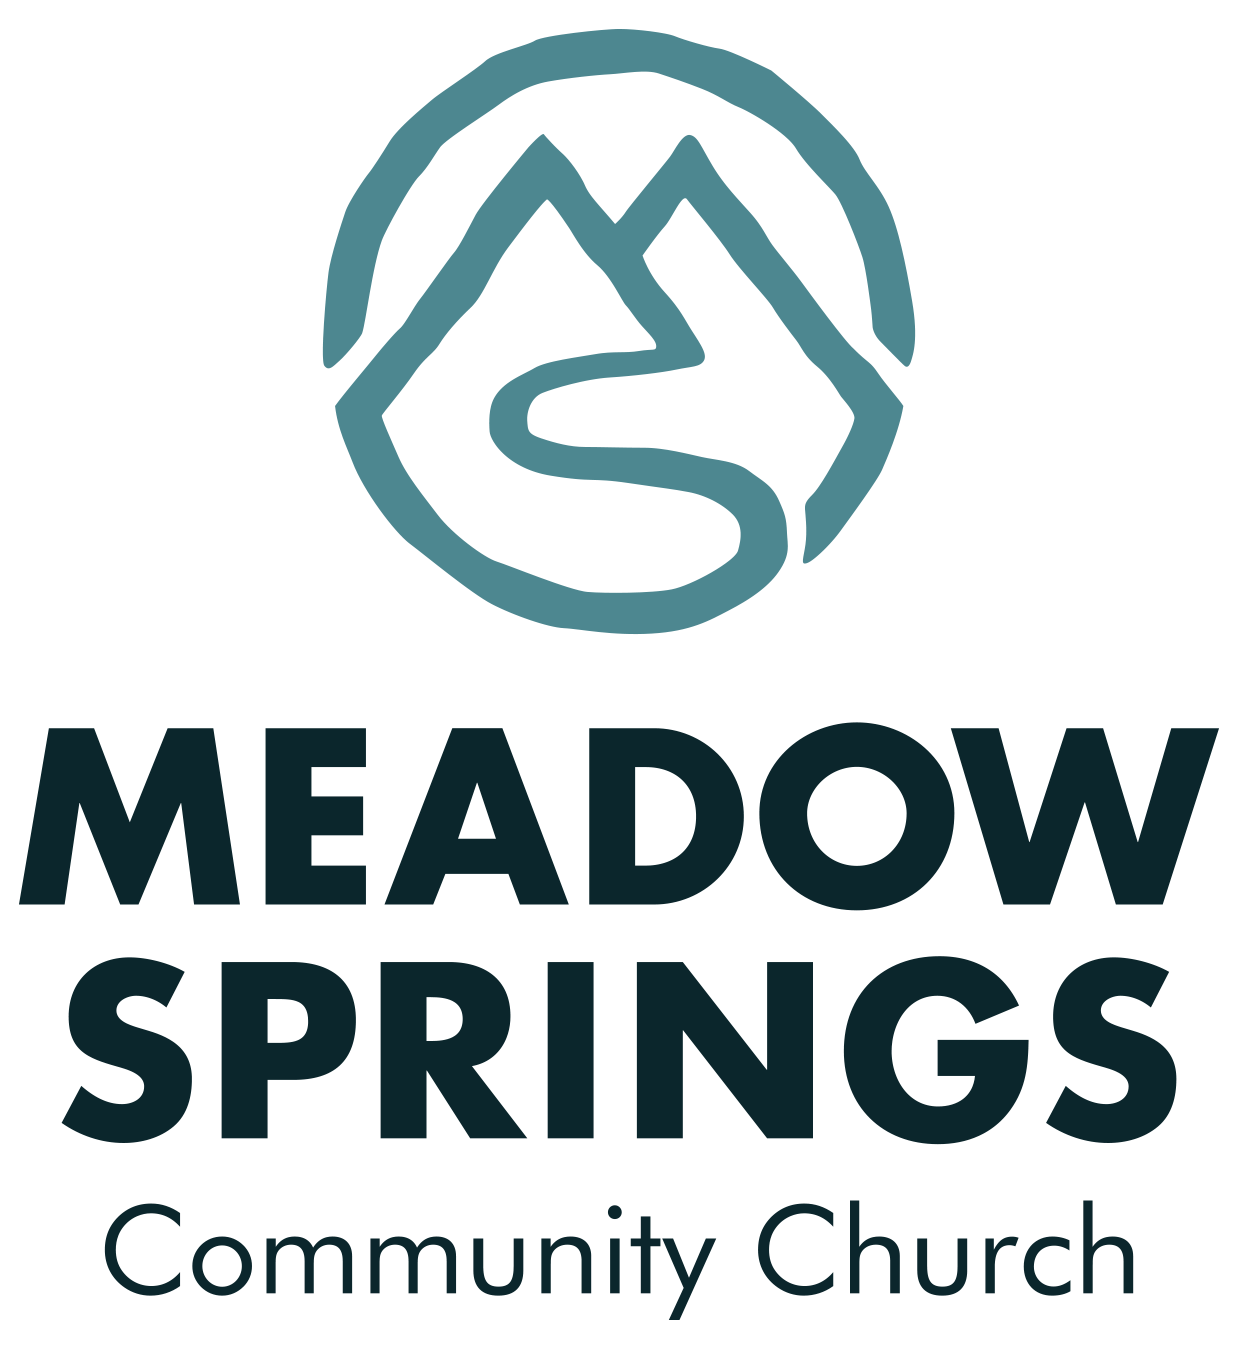 MEADOW SPRINGS COMMUNITY CHURCH